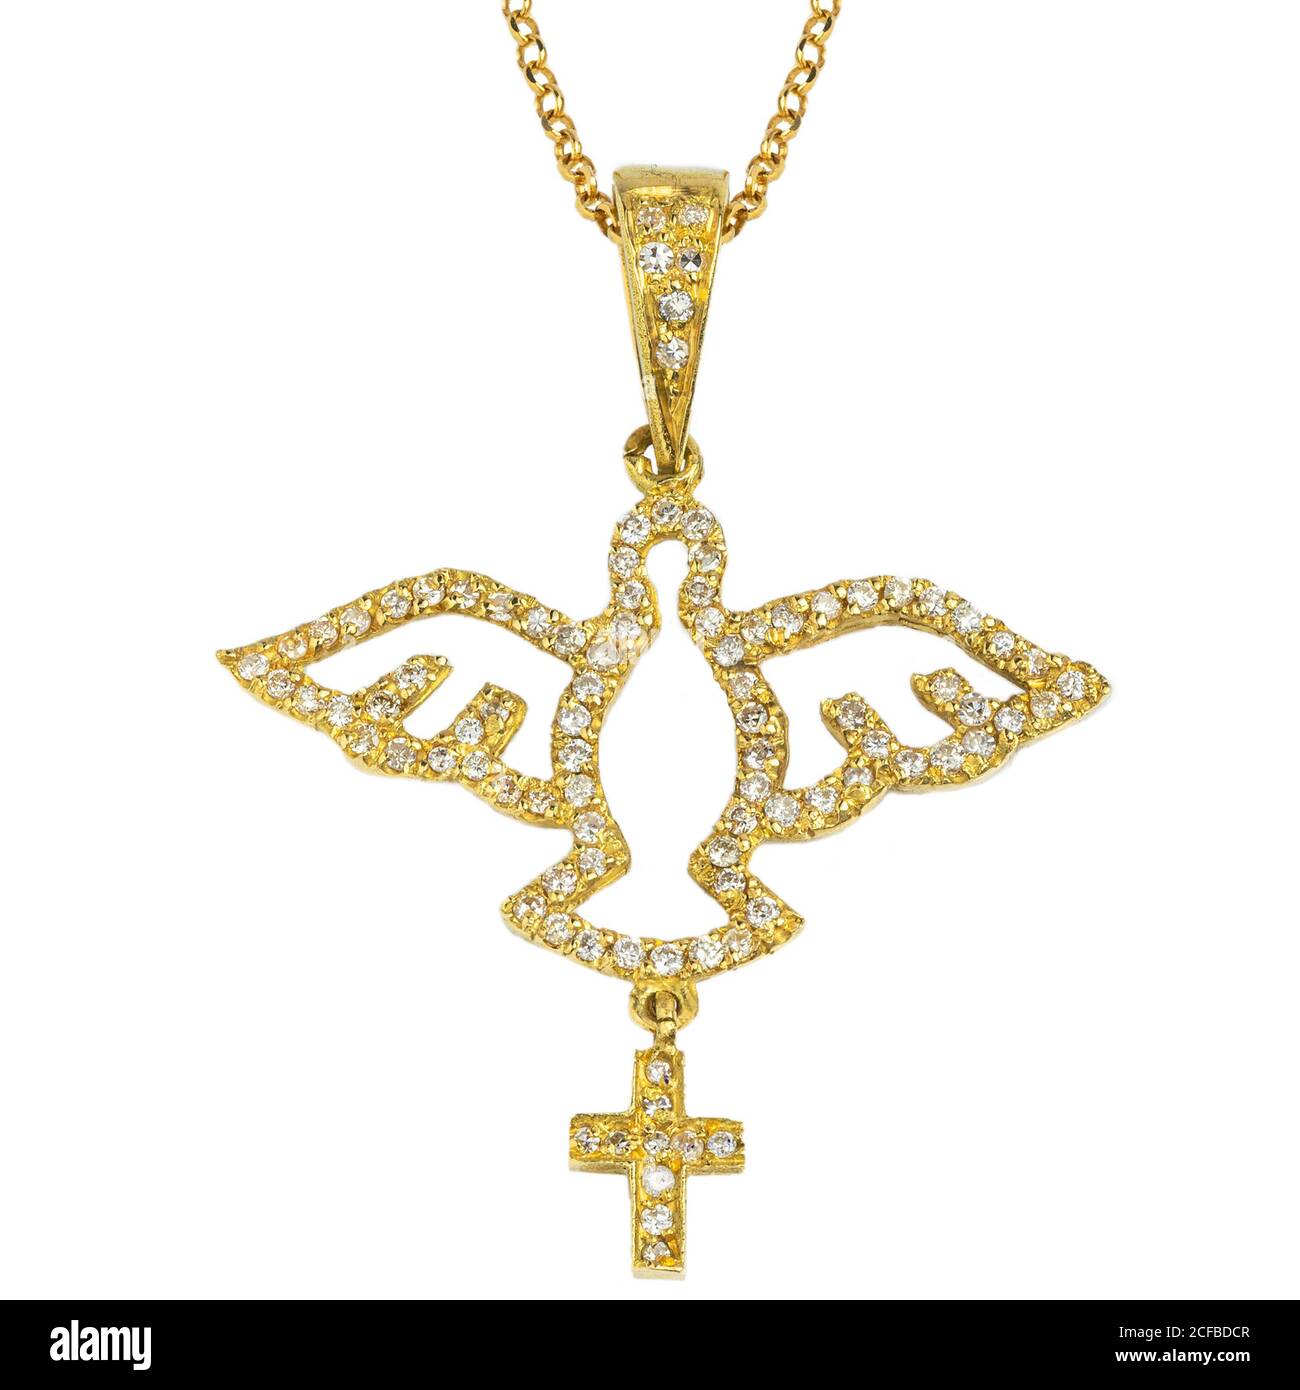 Gold diamond and gemstone necklace closeup macro isolated on white background Stock Photo